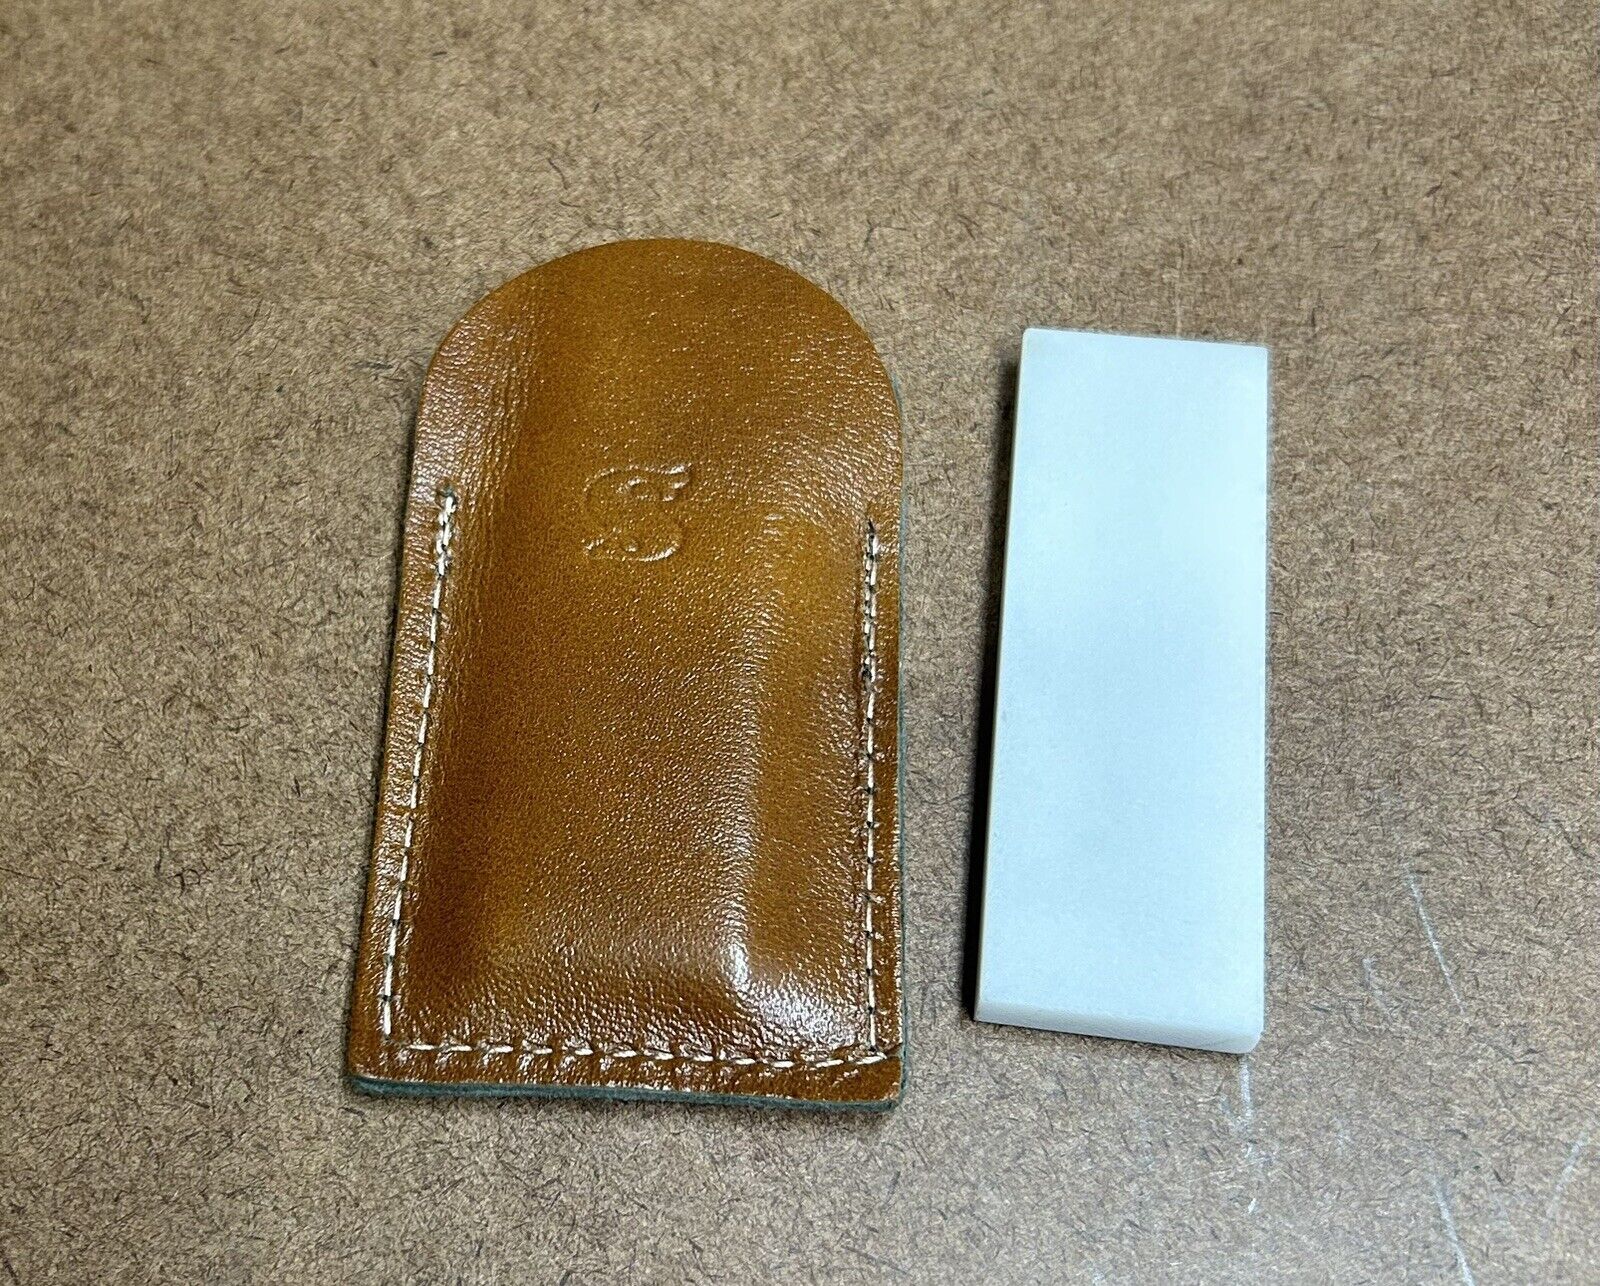 3” X 1” X 1/4” Translucent White Arkansas Pocket Stone